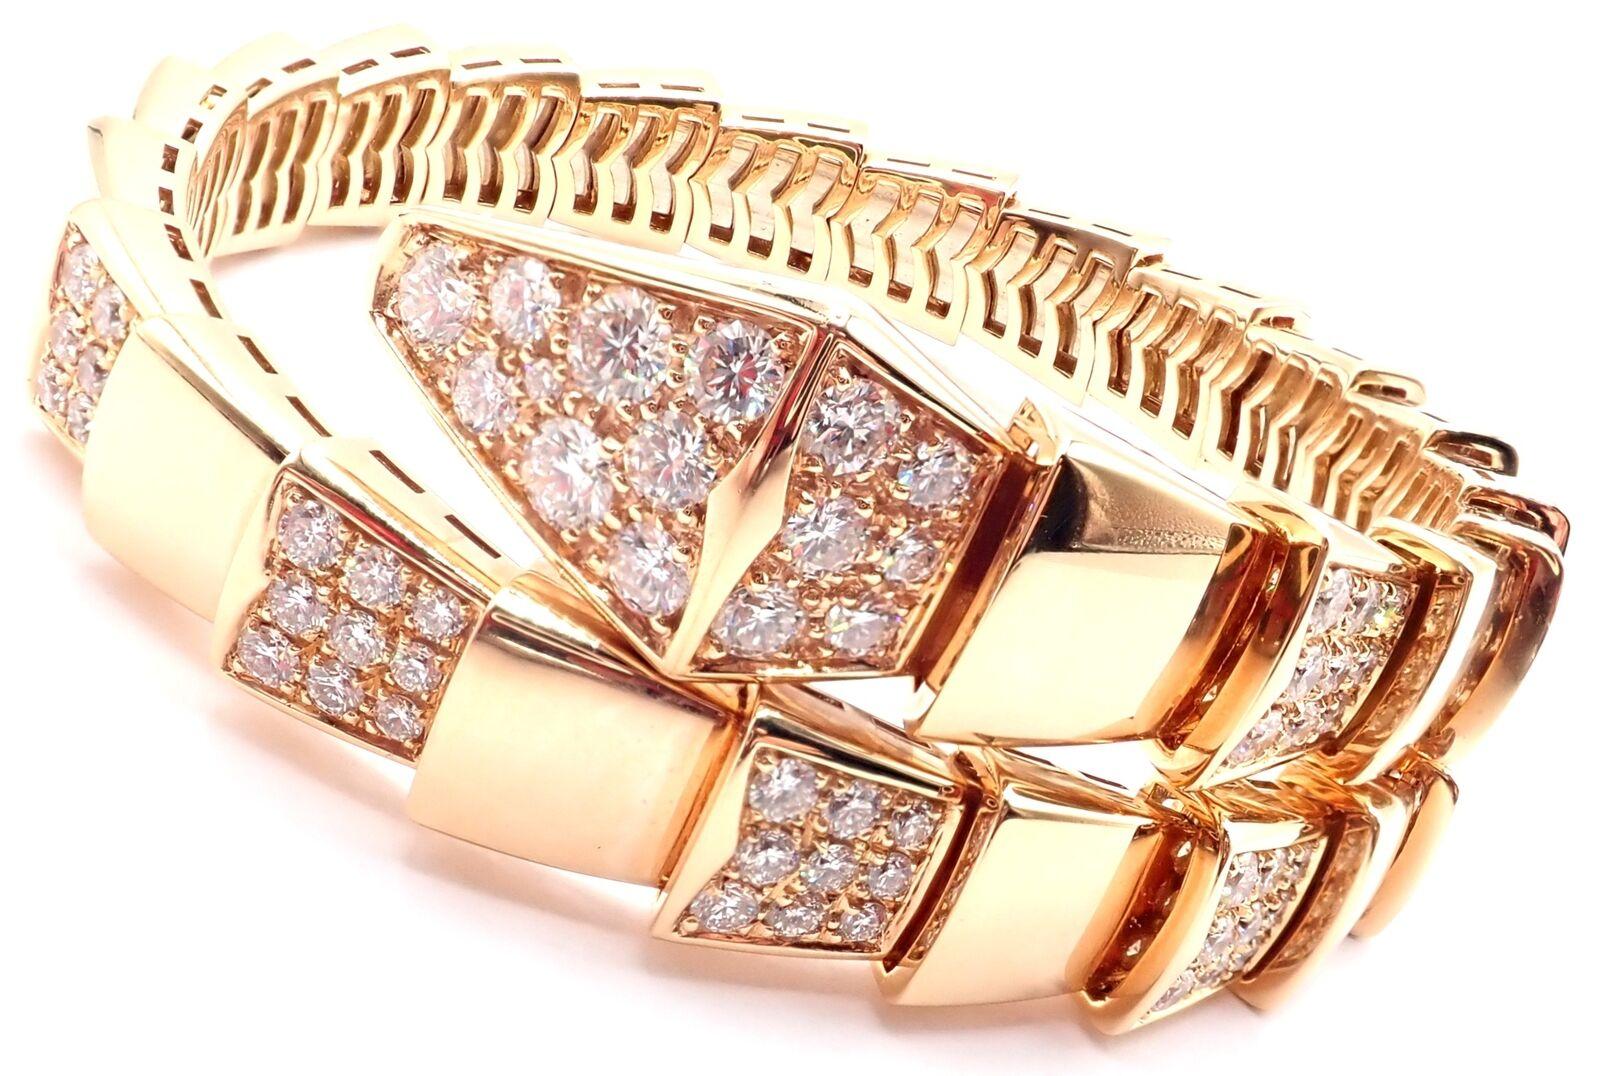 18k Rose Gold Diamond Serpenti Viper Snake Bangle Bracelet by Bulgari. 
With 127 round brilliant cut diamonds VVS1 clarity, E color total weight approximately 7ct.
Details:
Size: Size Medium, 17cm, 6.7